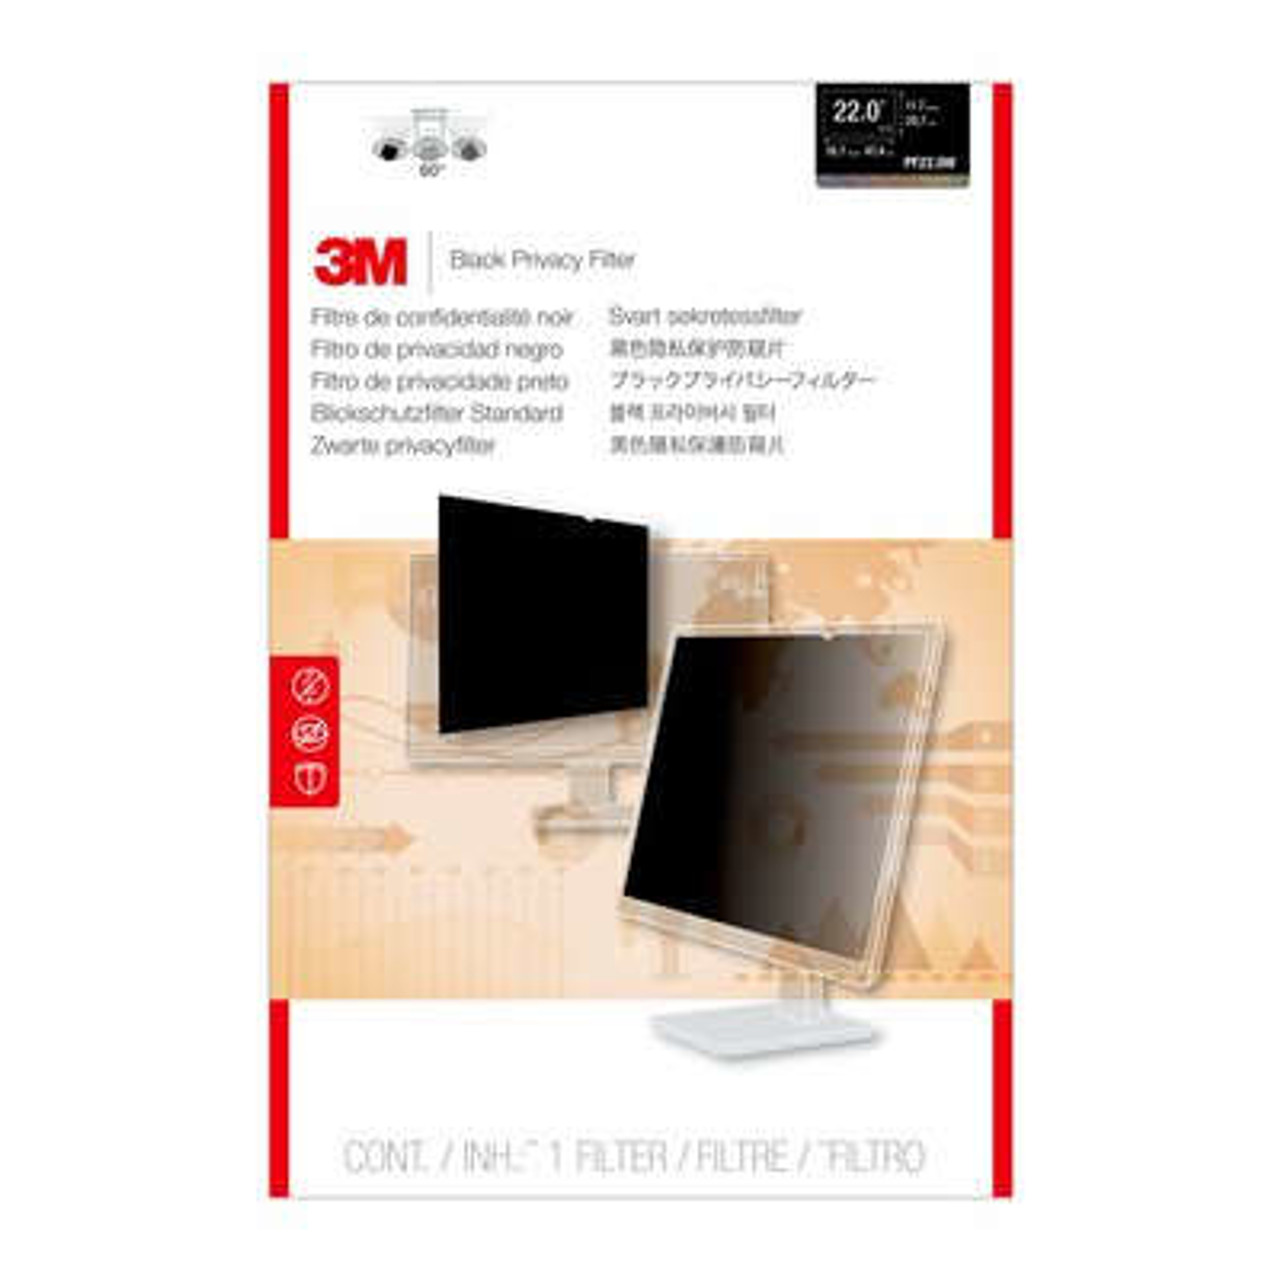 3M PF220W1B 22" Monitor Frameless display privacy filter display privacy filter